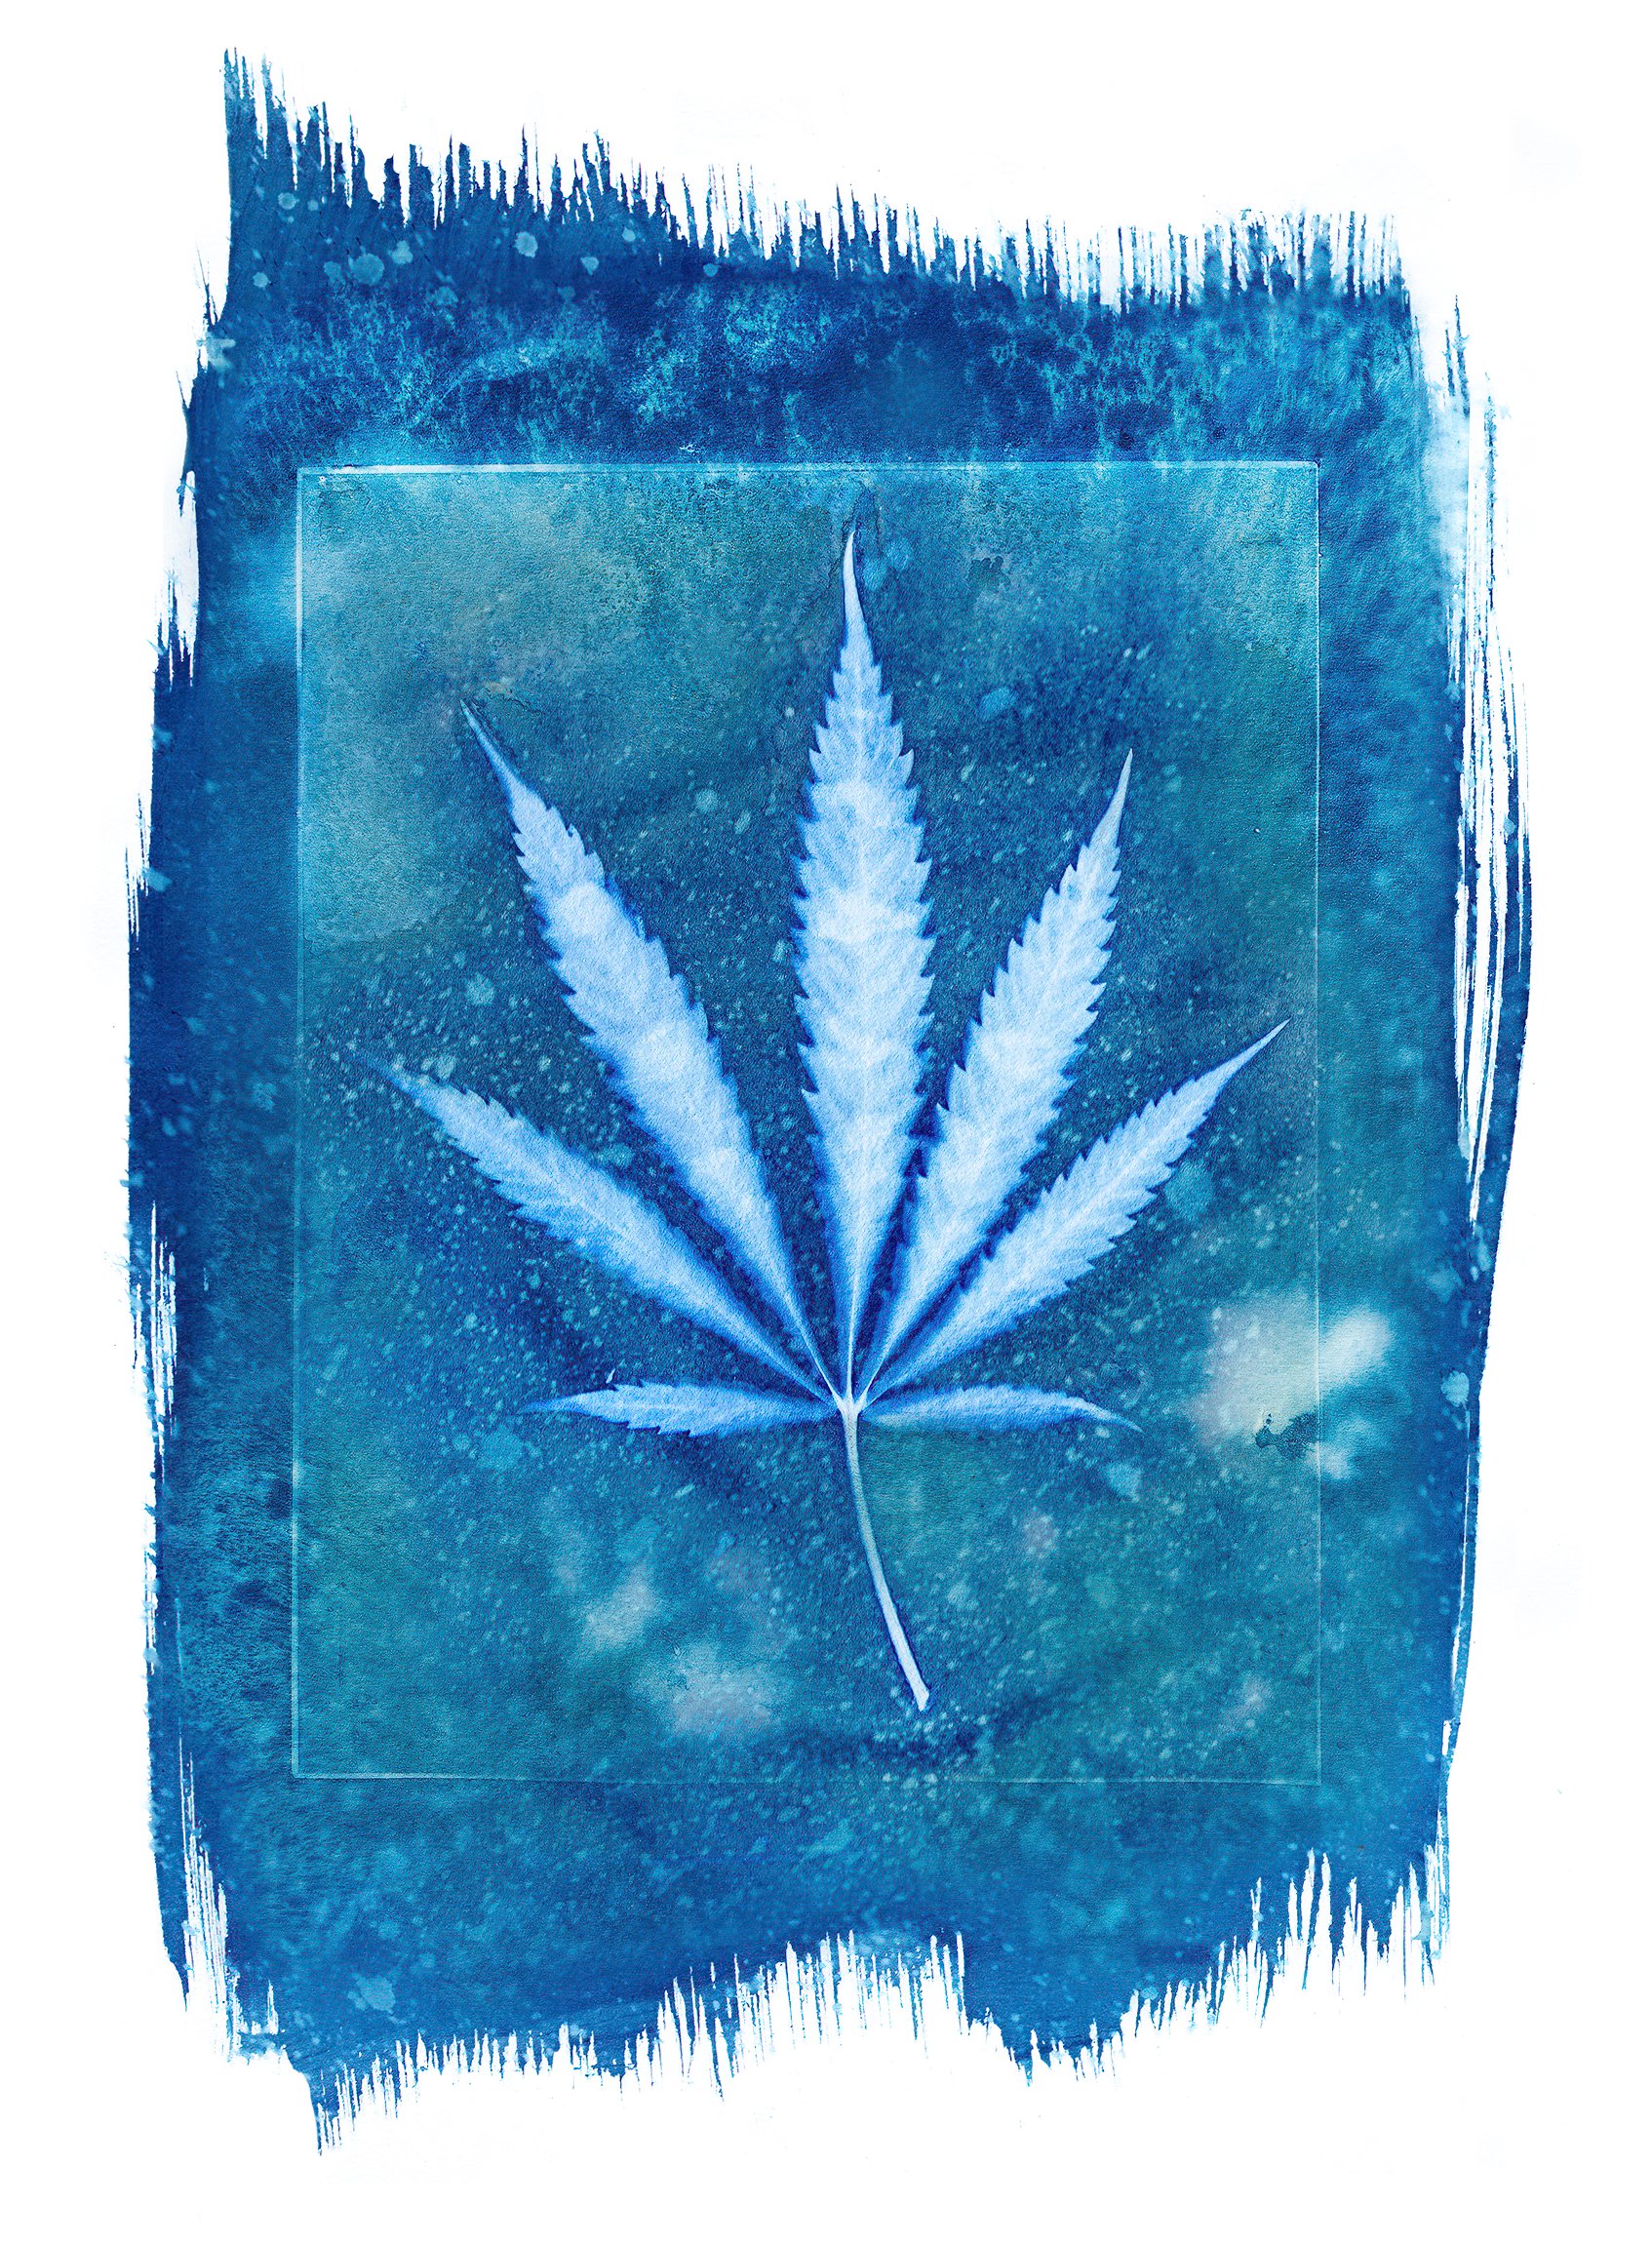 CannabisCyanotype.jpg